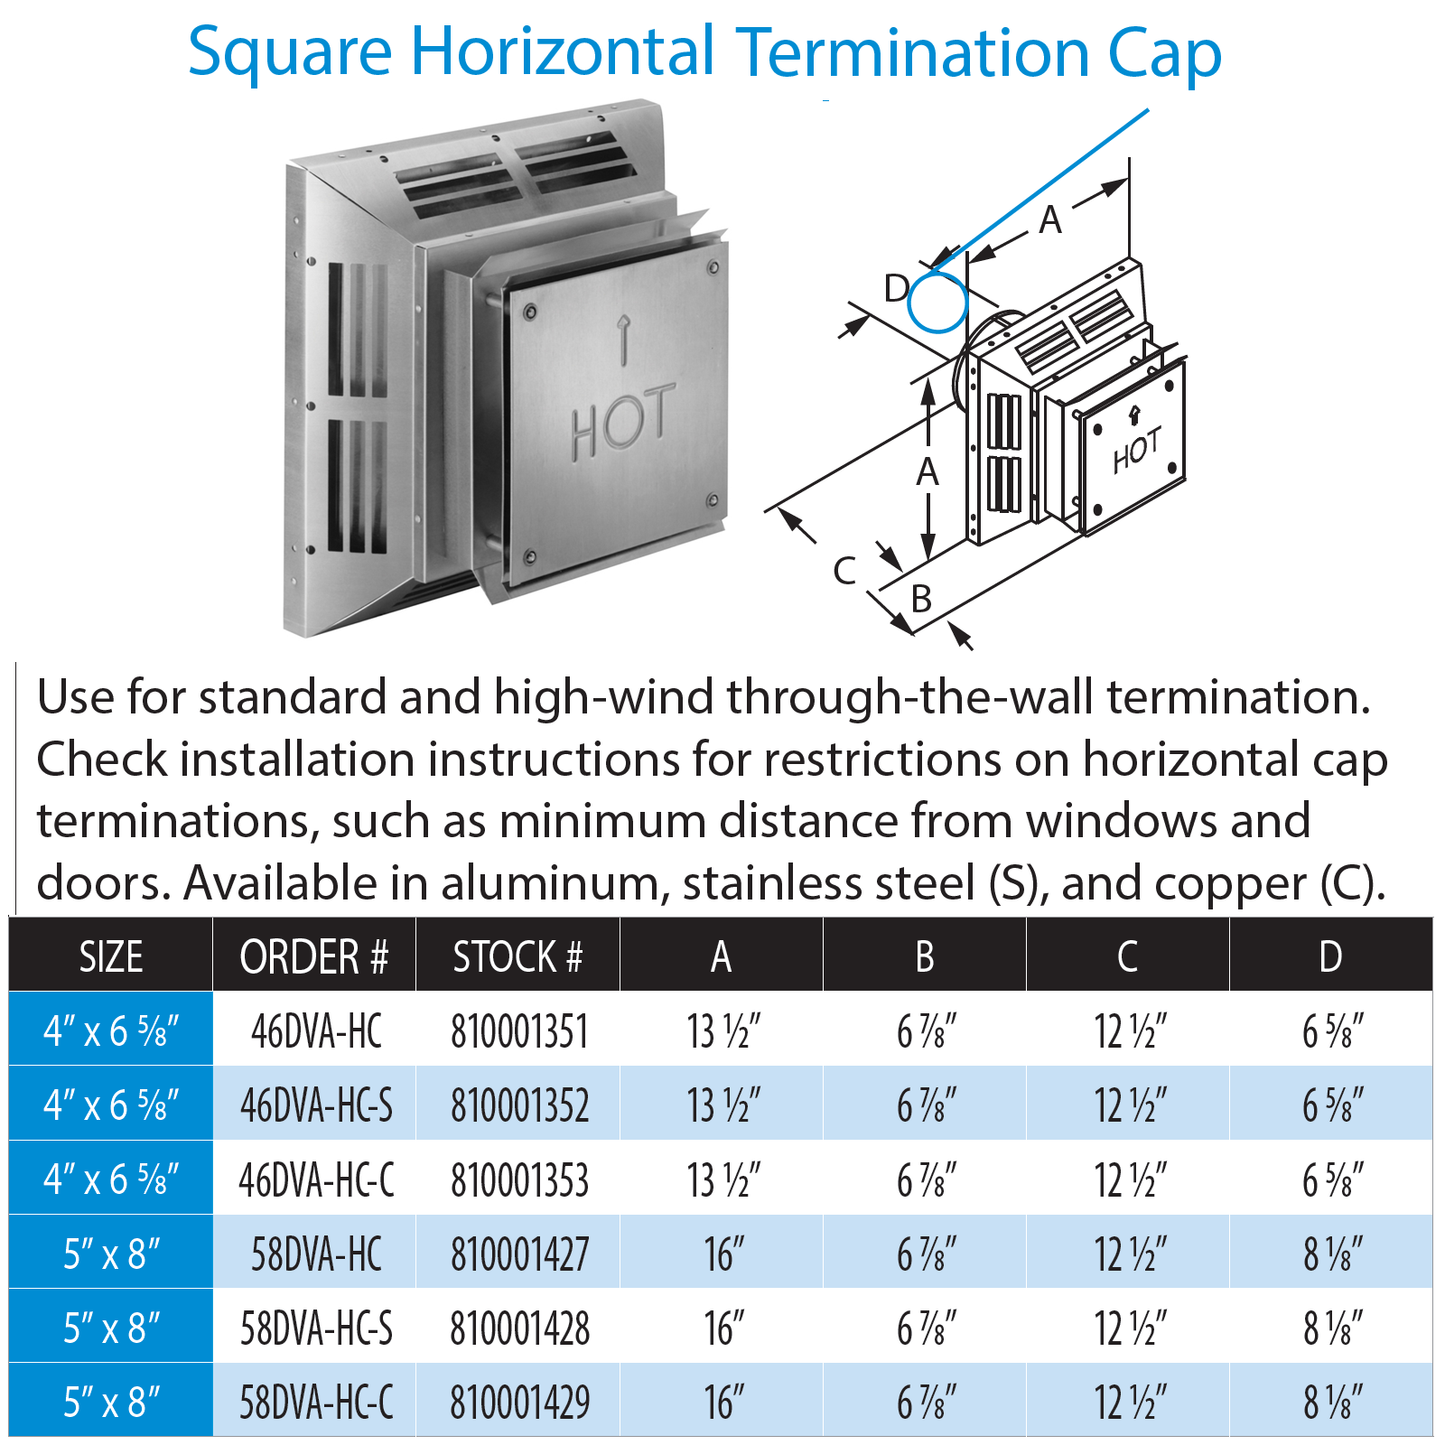 DuraVent DirectVent Pro Square Horizontal Termination Cap | 46DVA-HC